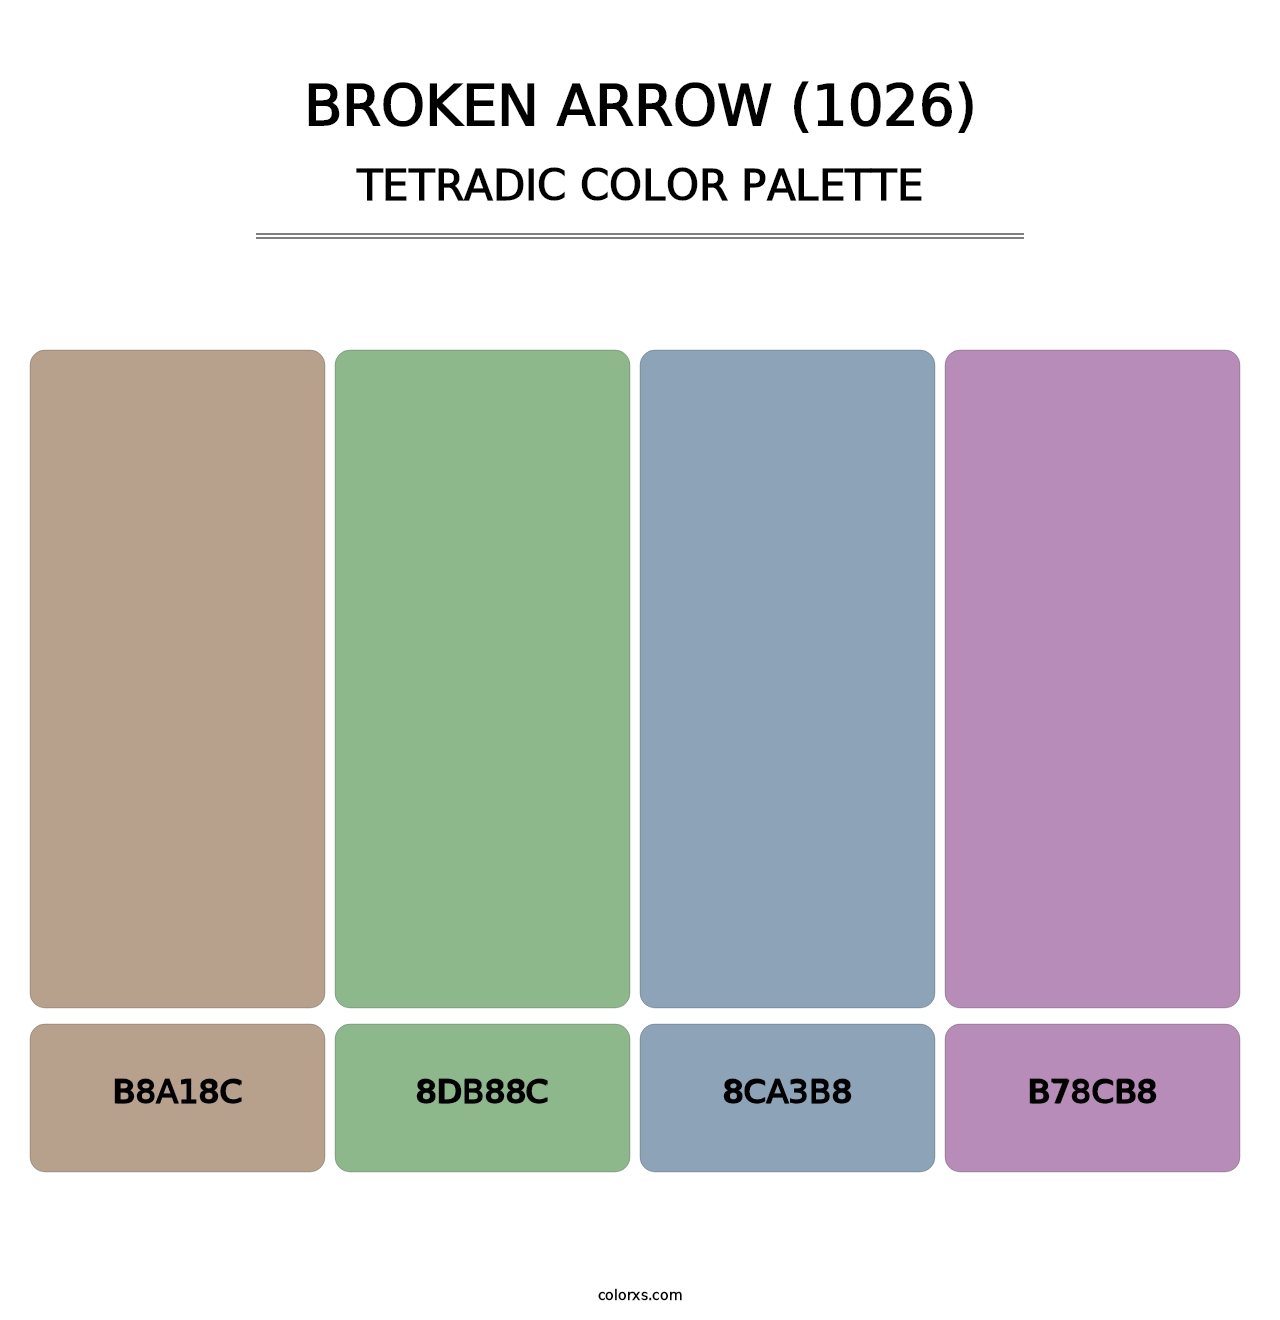 Broken Arrow (1026) - Tetradic Color Palette